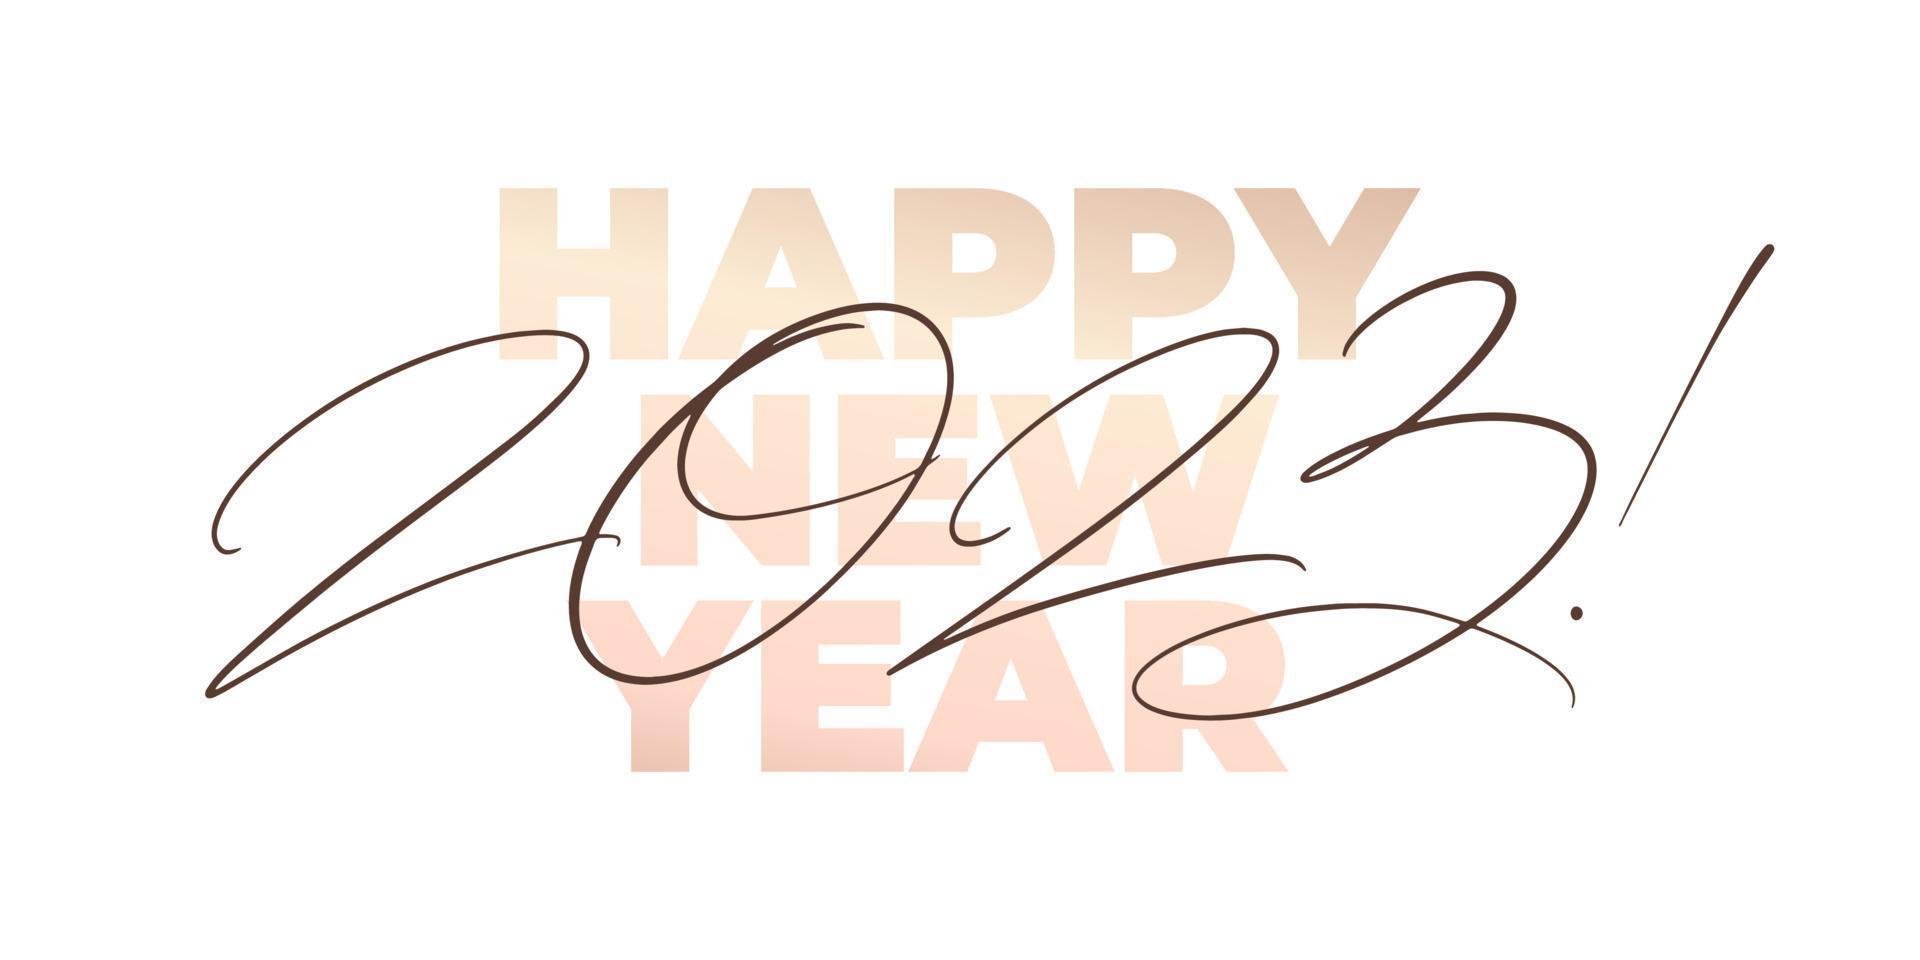 2023 modern thin lettering. New Year minimalistic elegant greeting card. Hand drawn black inscription. vector